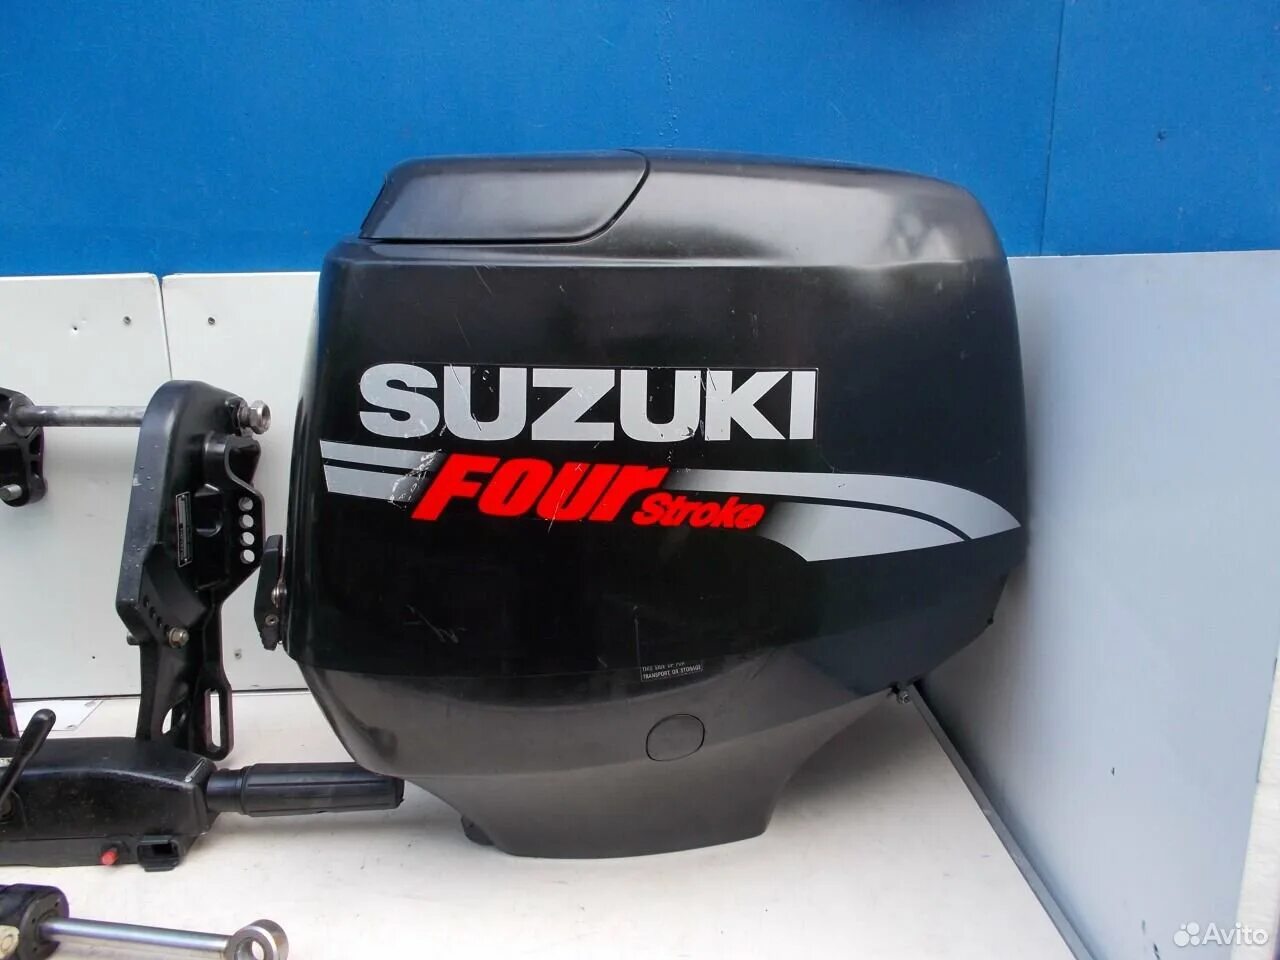 Сузуки дф купить. Suzuki df50. Мотор Сузуки 30. Сузуки ДФ 50. Лодочный мотор Сузуки дф50.